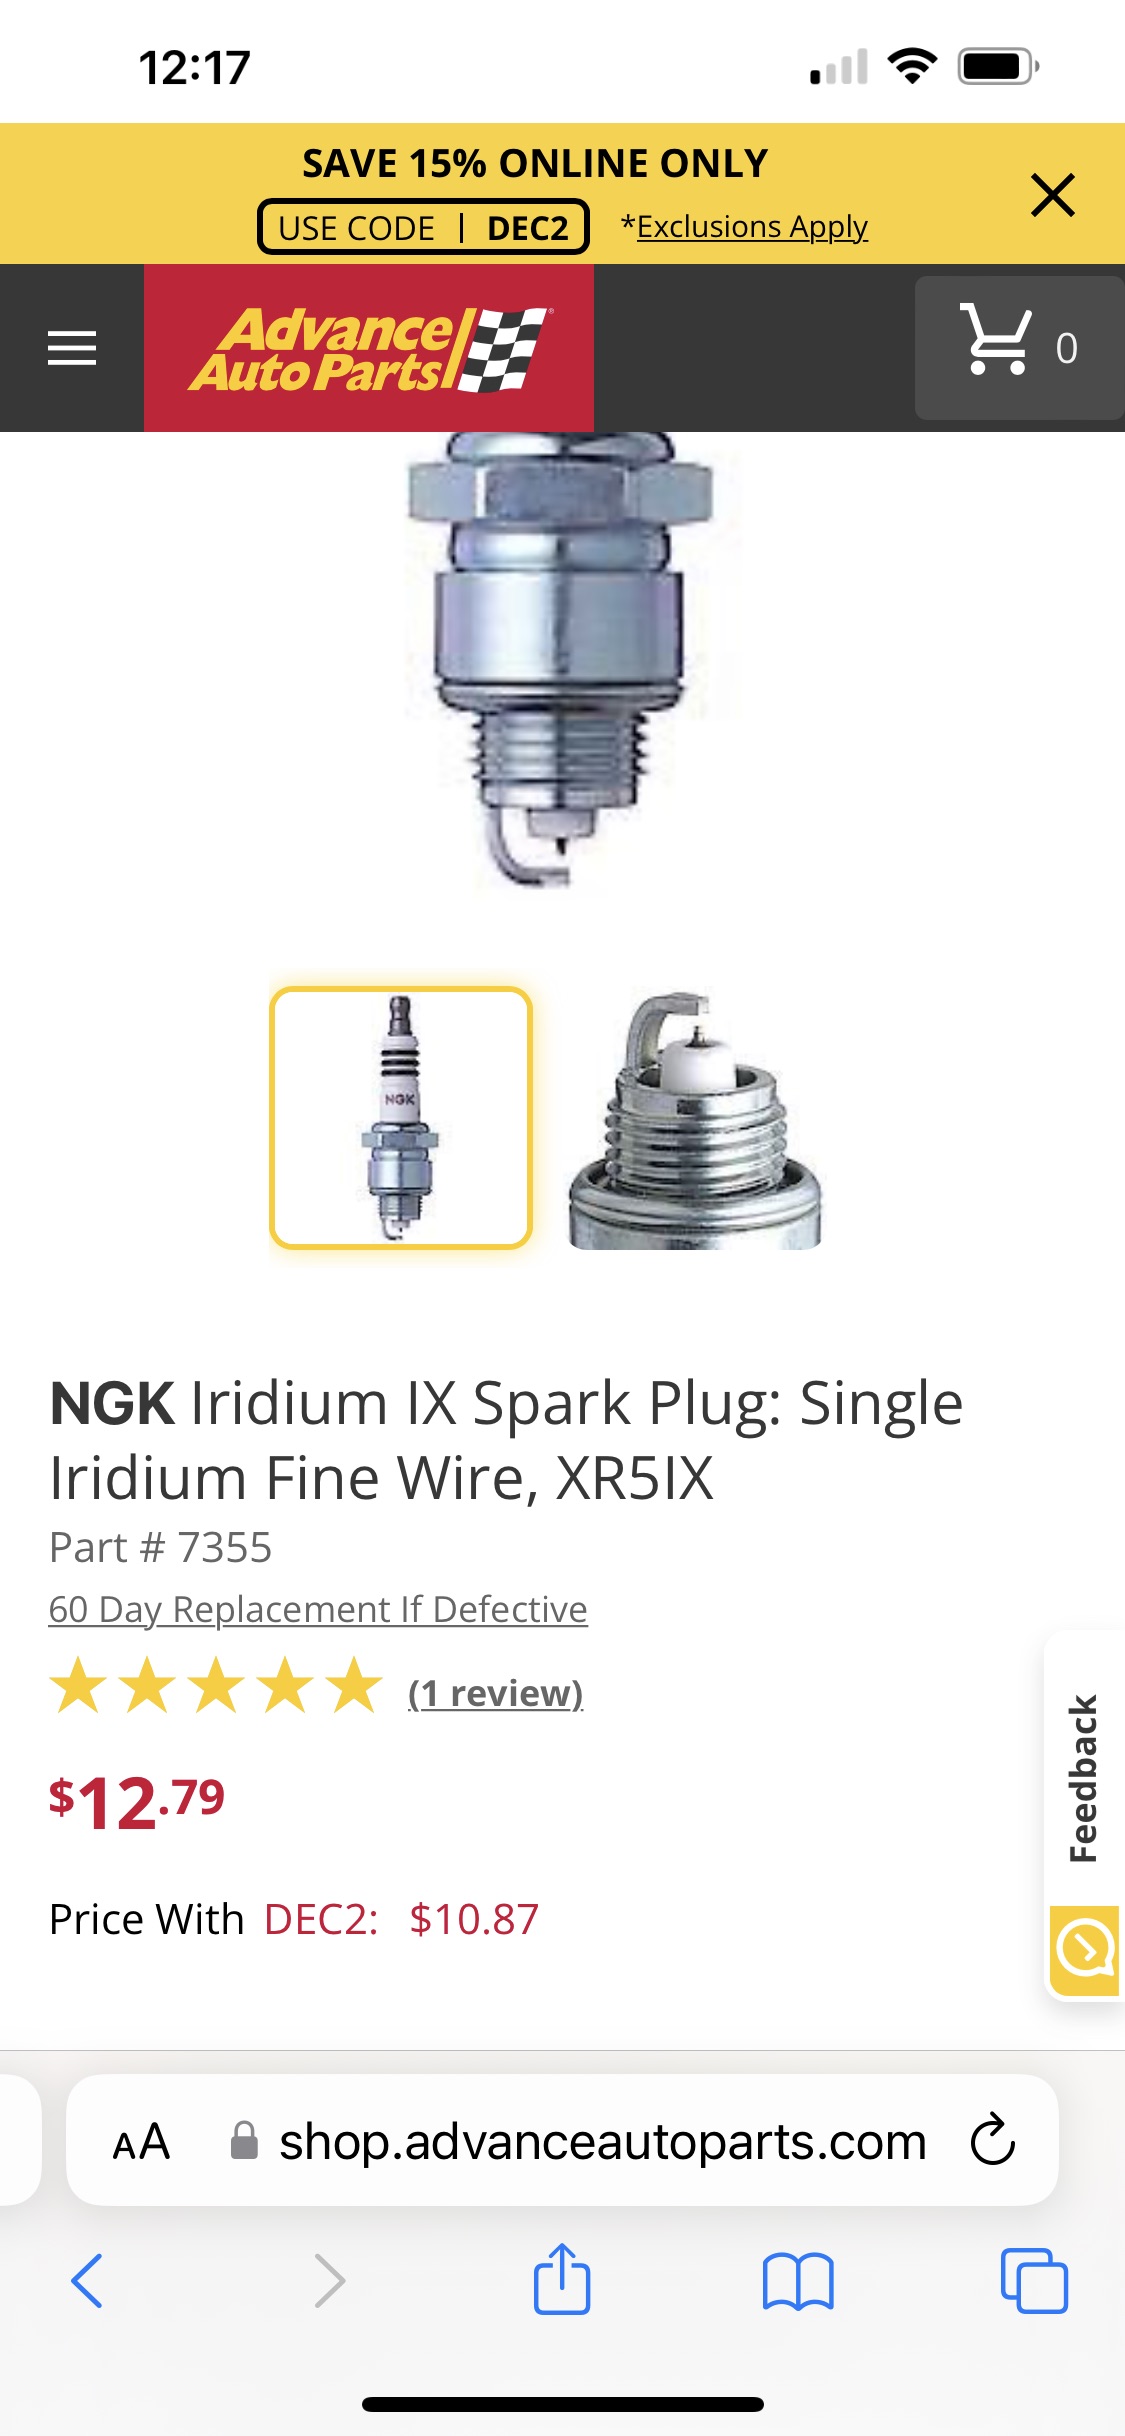 NGK Iridium IX Spark Plug Single Iridium Fine Wire, XR5IX 7355 - Advance Auto Parts.png